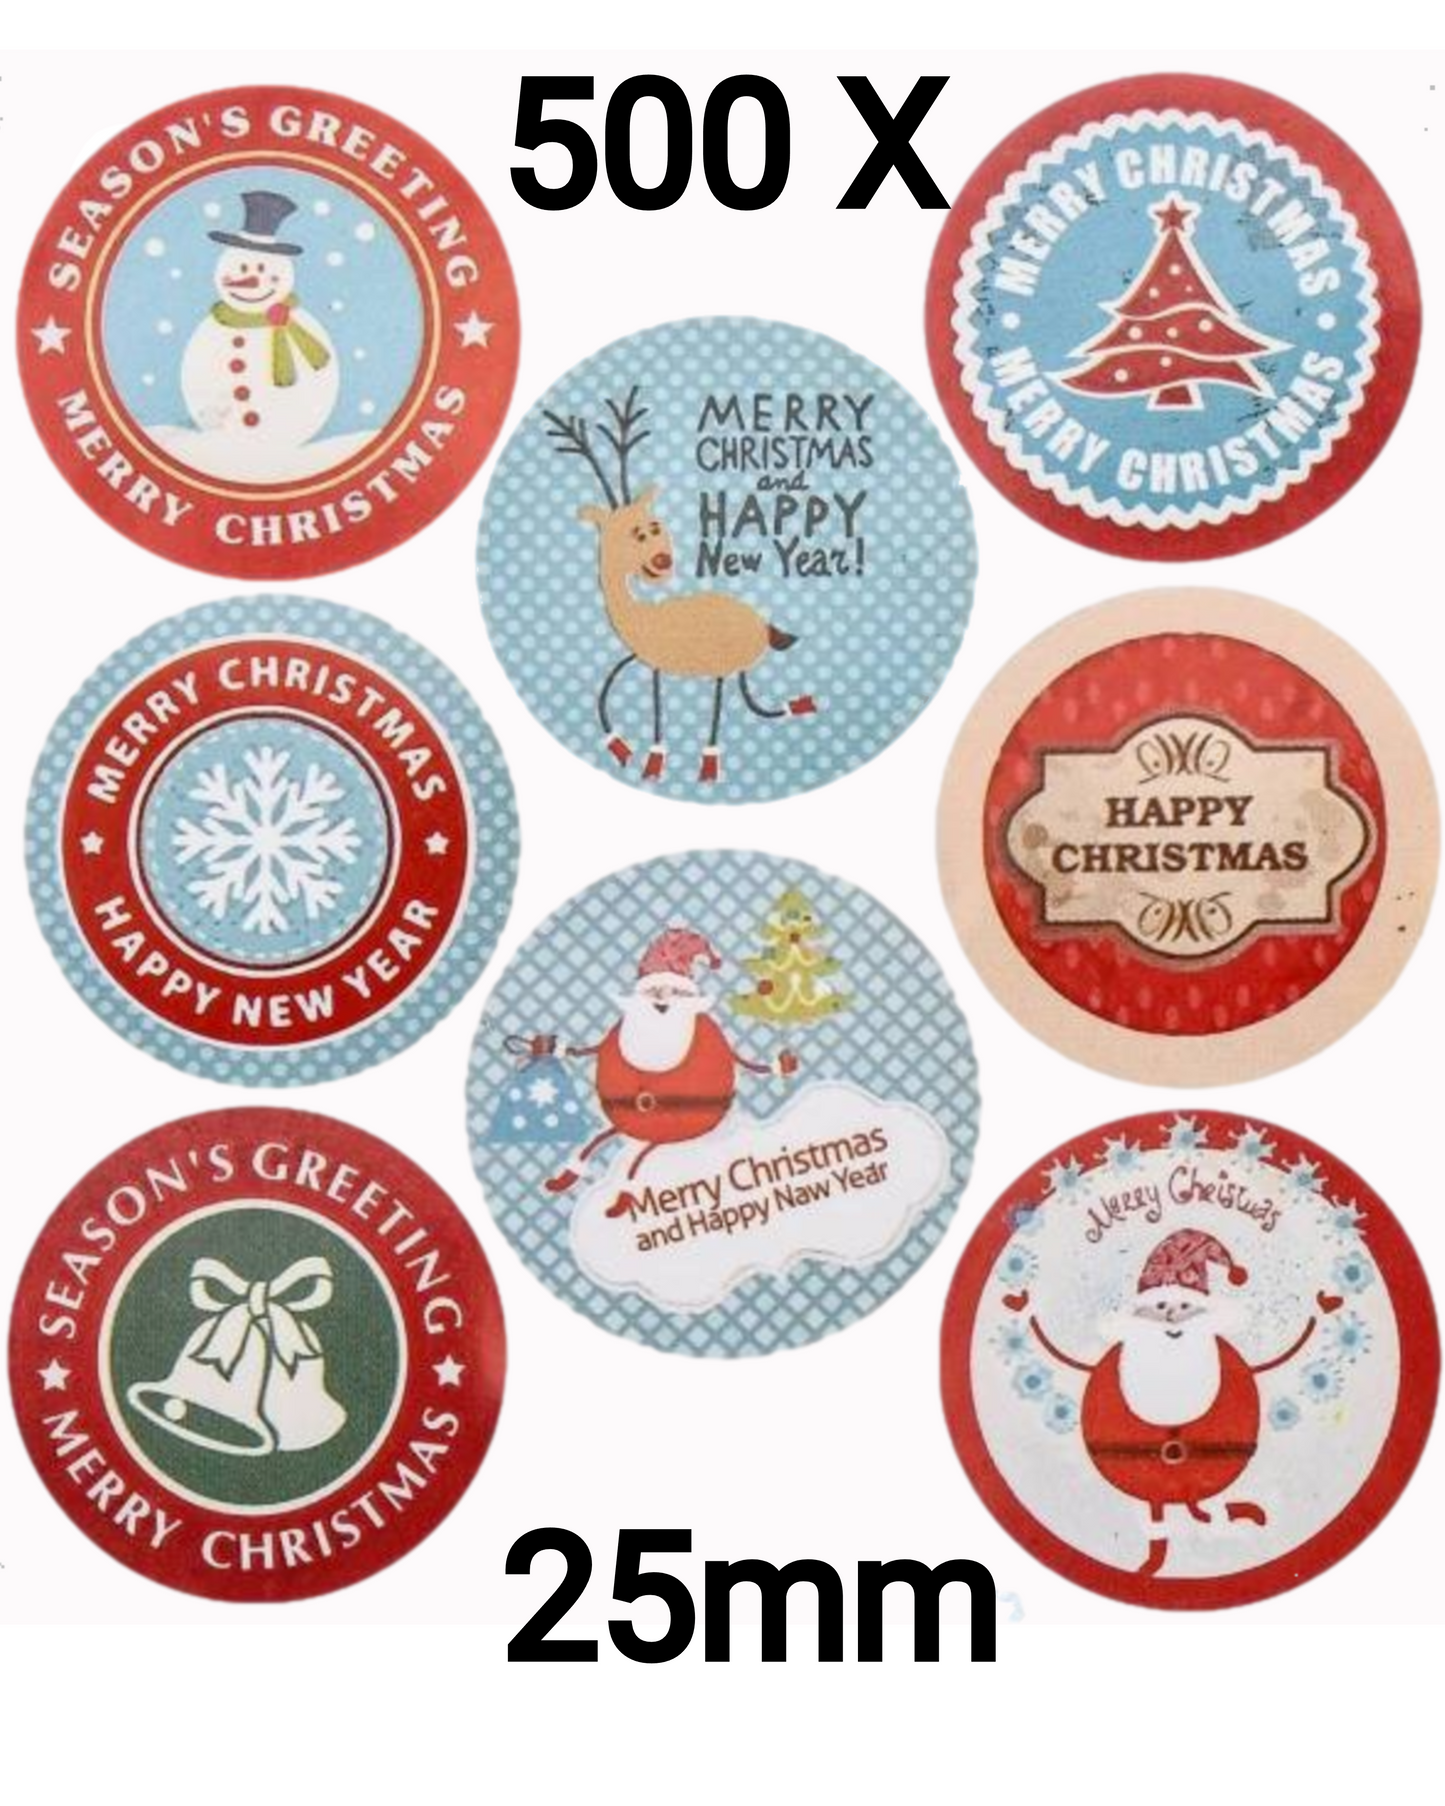 500 LOVV Kerststickers 25 mm-Stickers Kerstmis-Sluitstickers Kerst-Op Rol